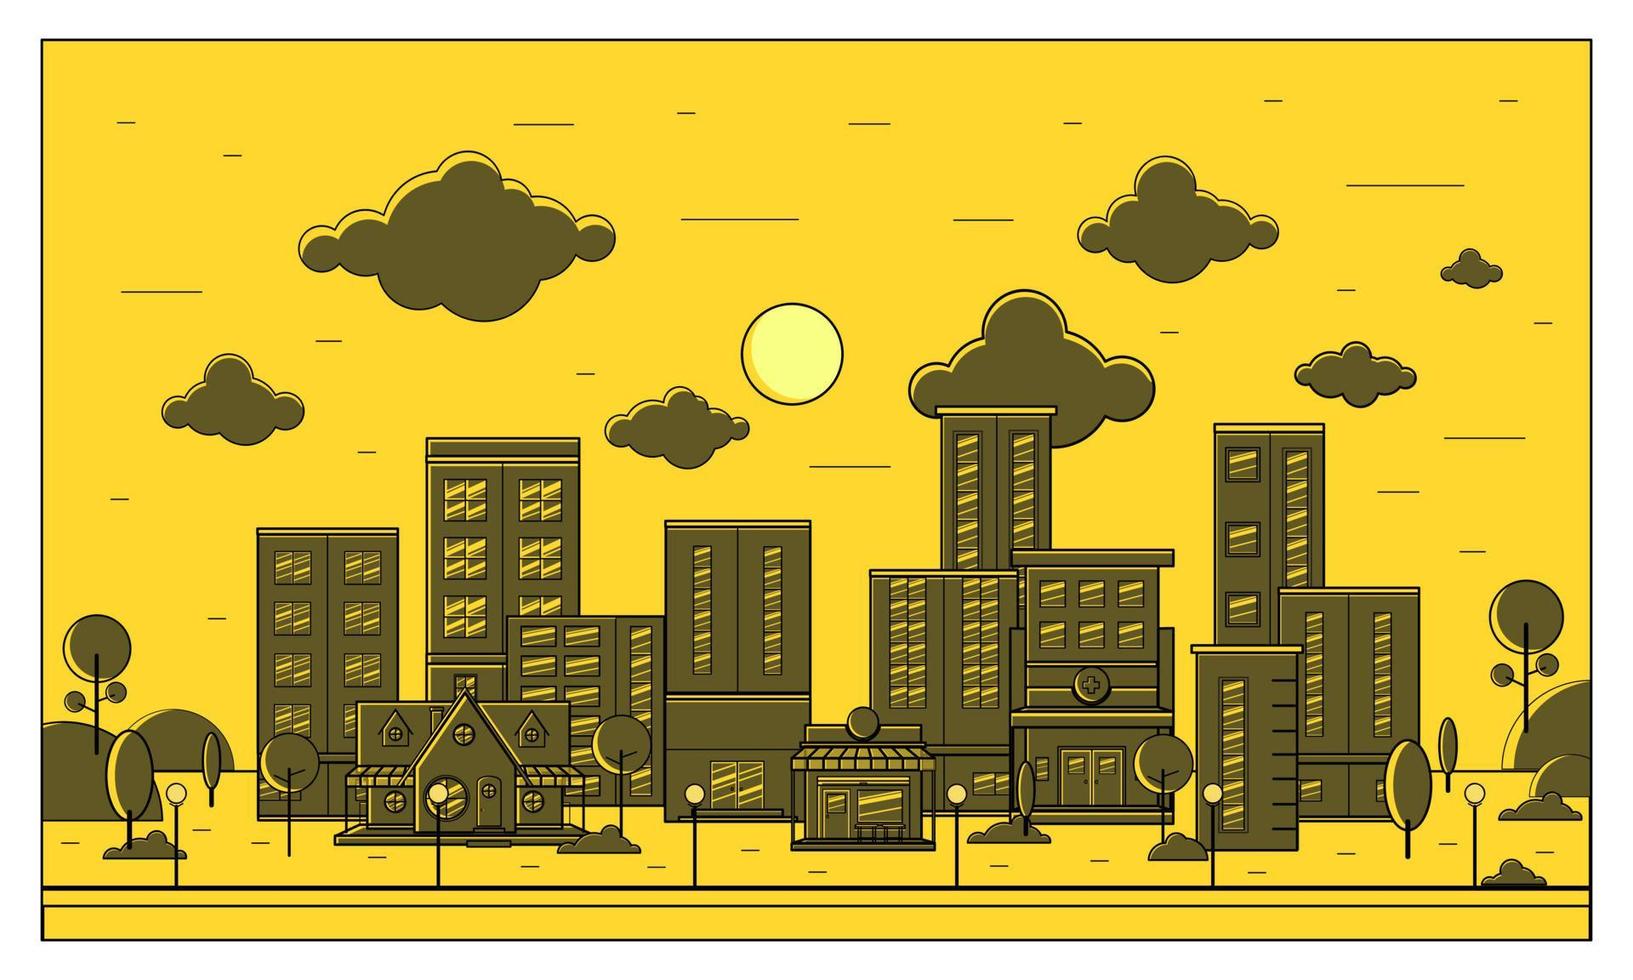 City building style flat design vector illustration